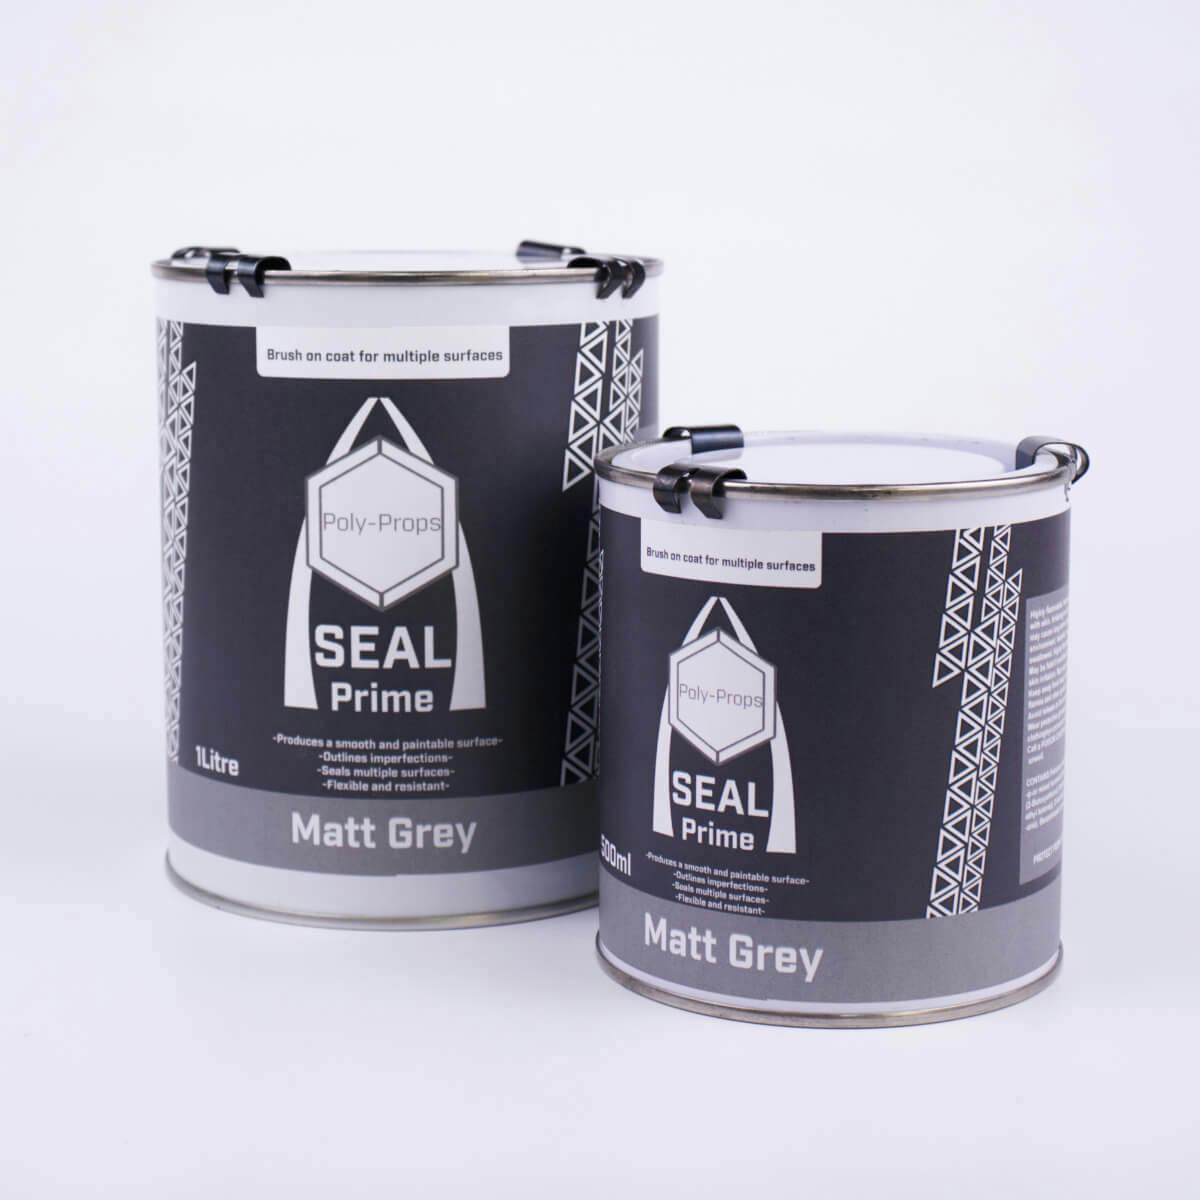 Variants of Seal Prime coating primer in matt grey